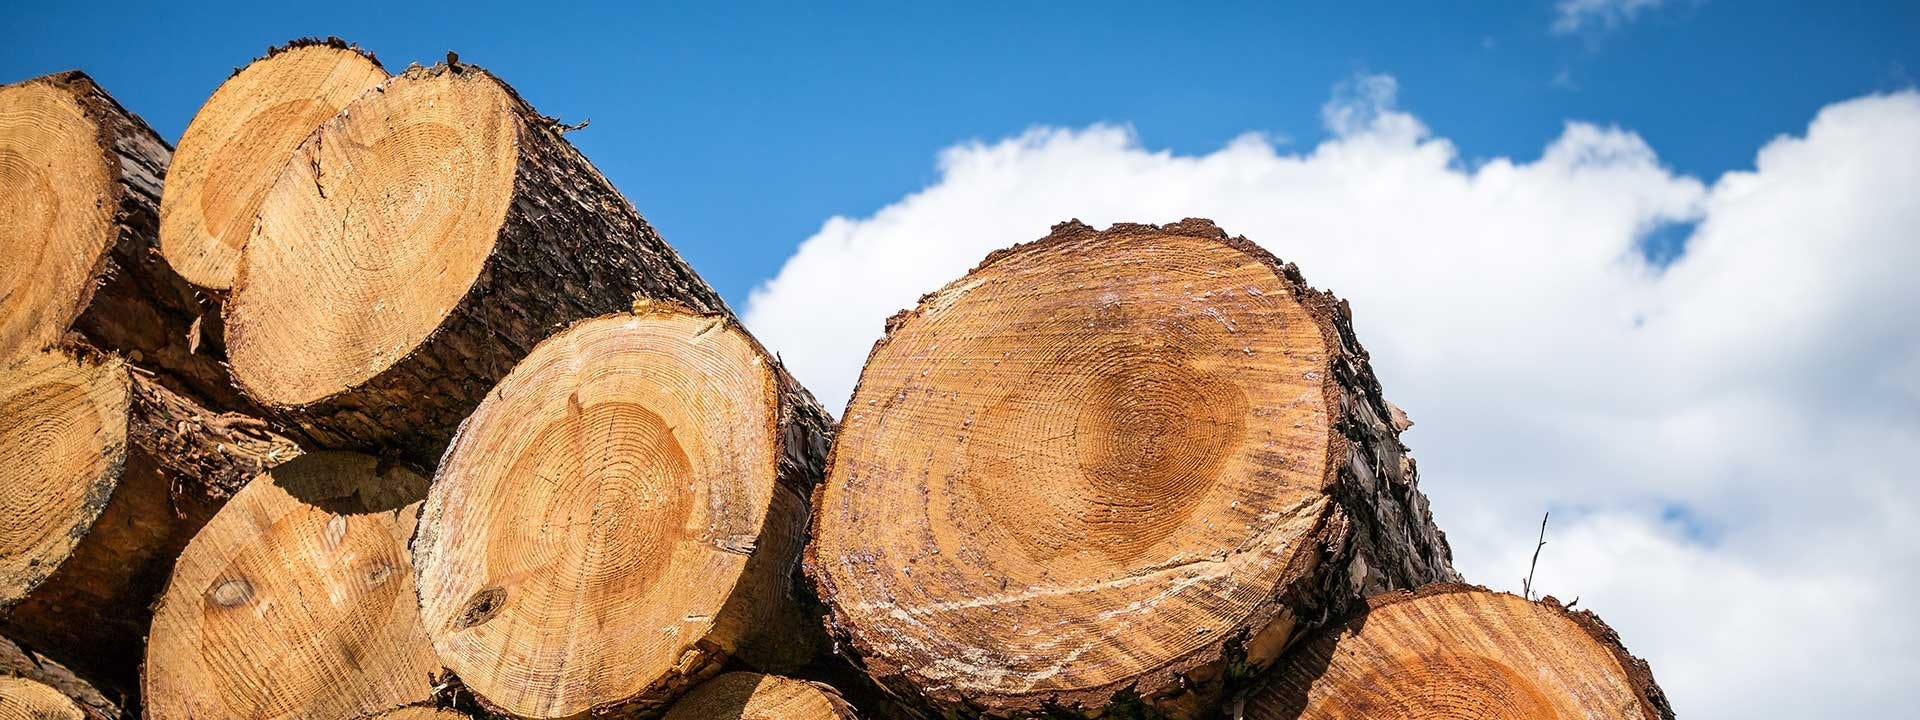 Wood-Mizer Establishes Corporate Office in Peru